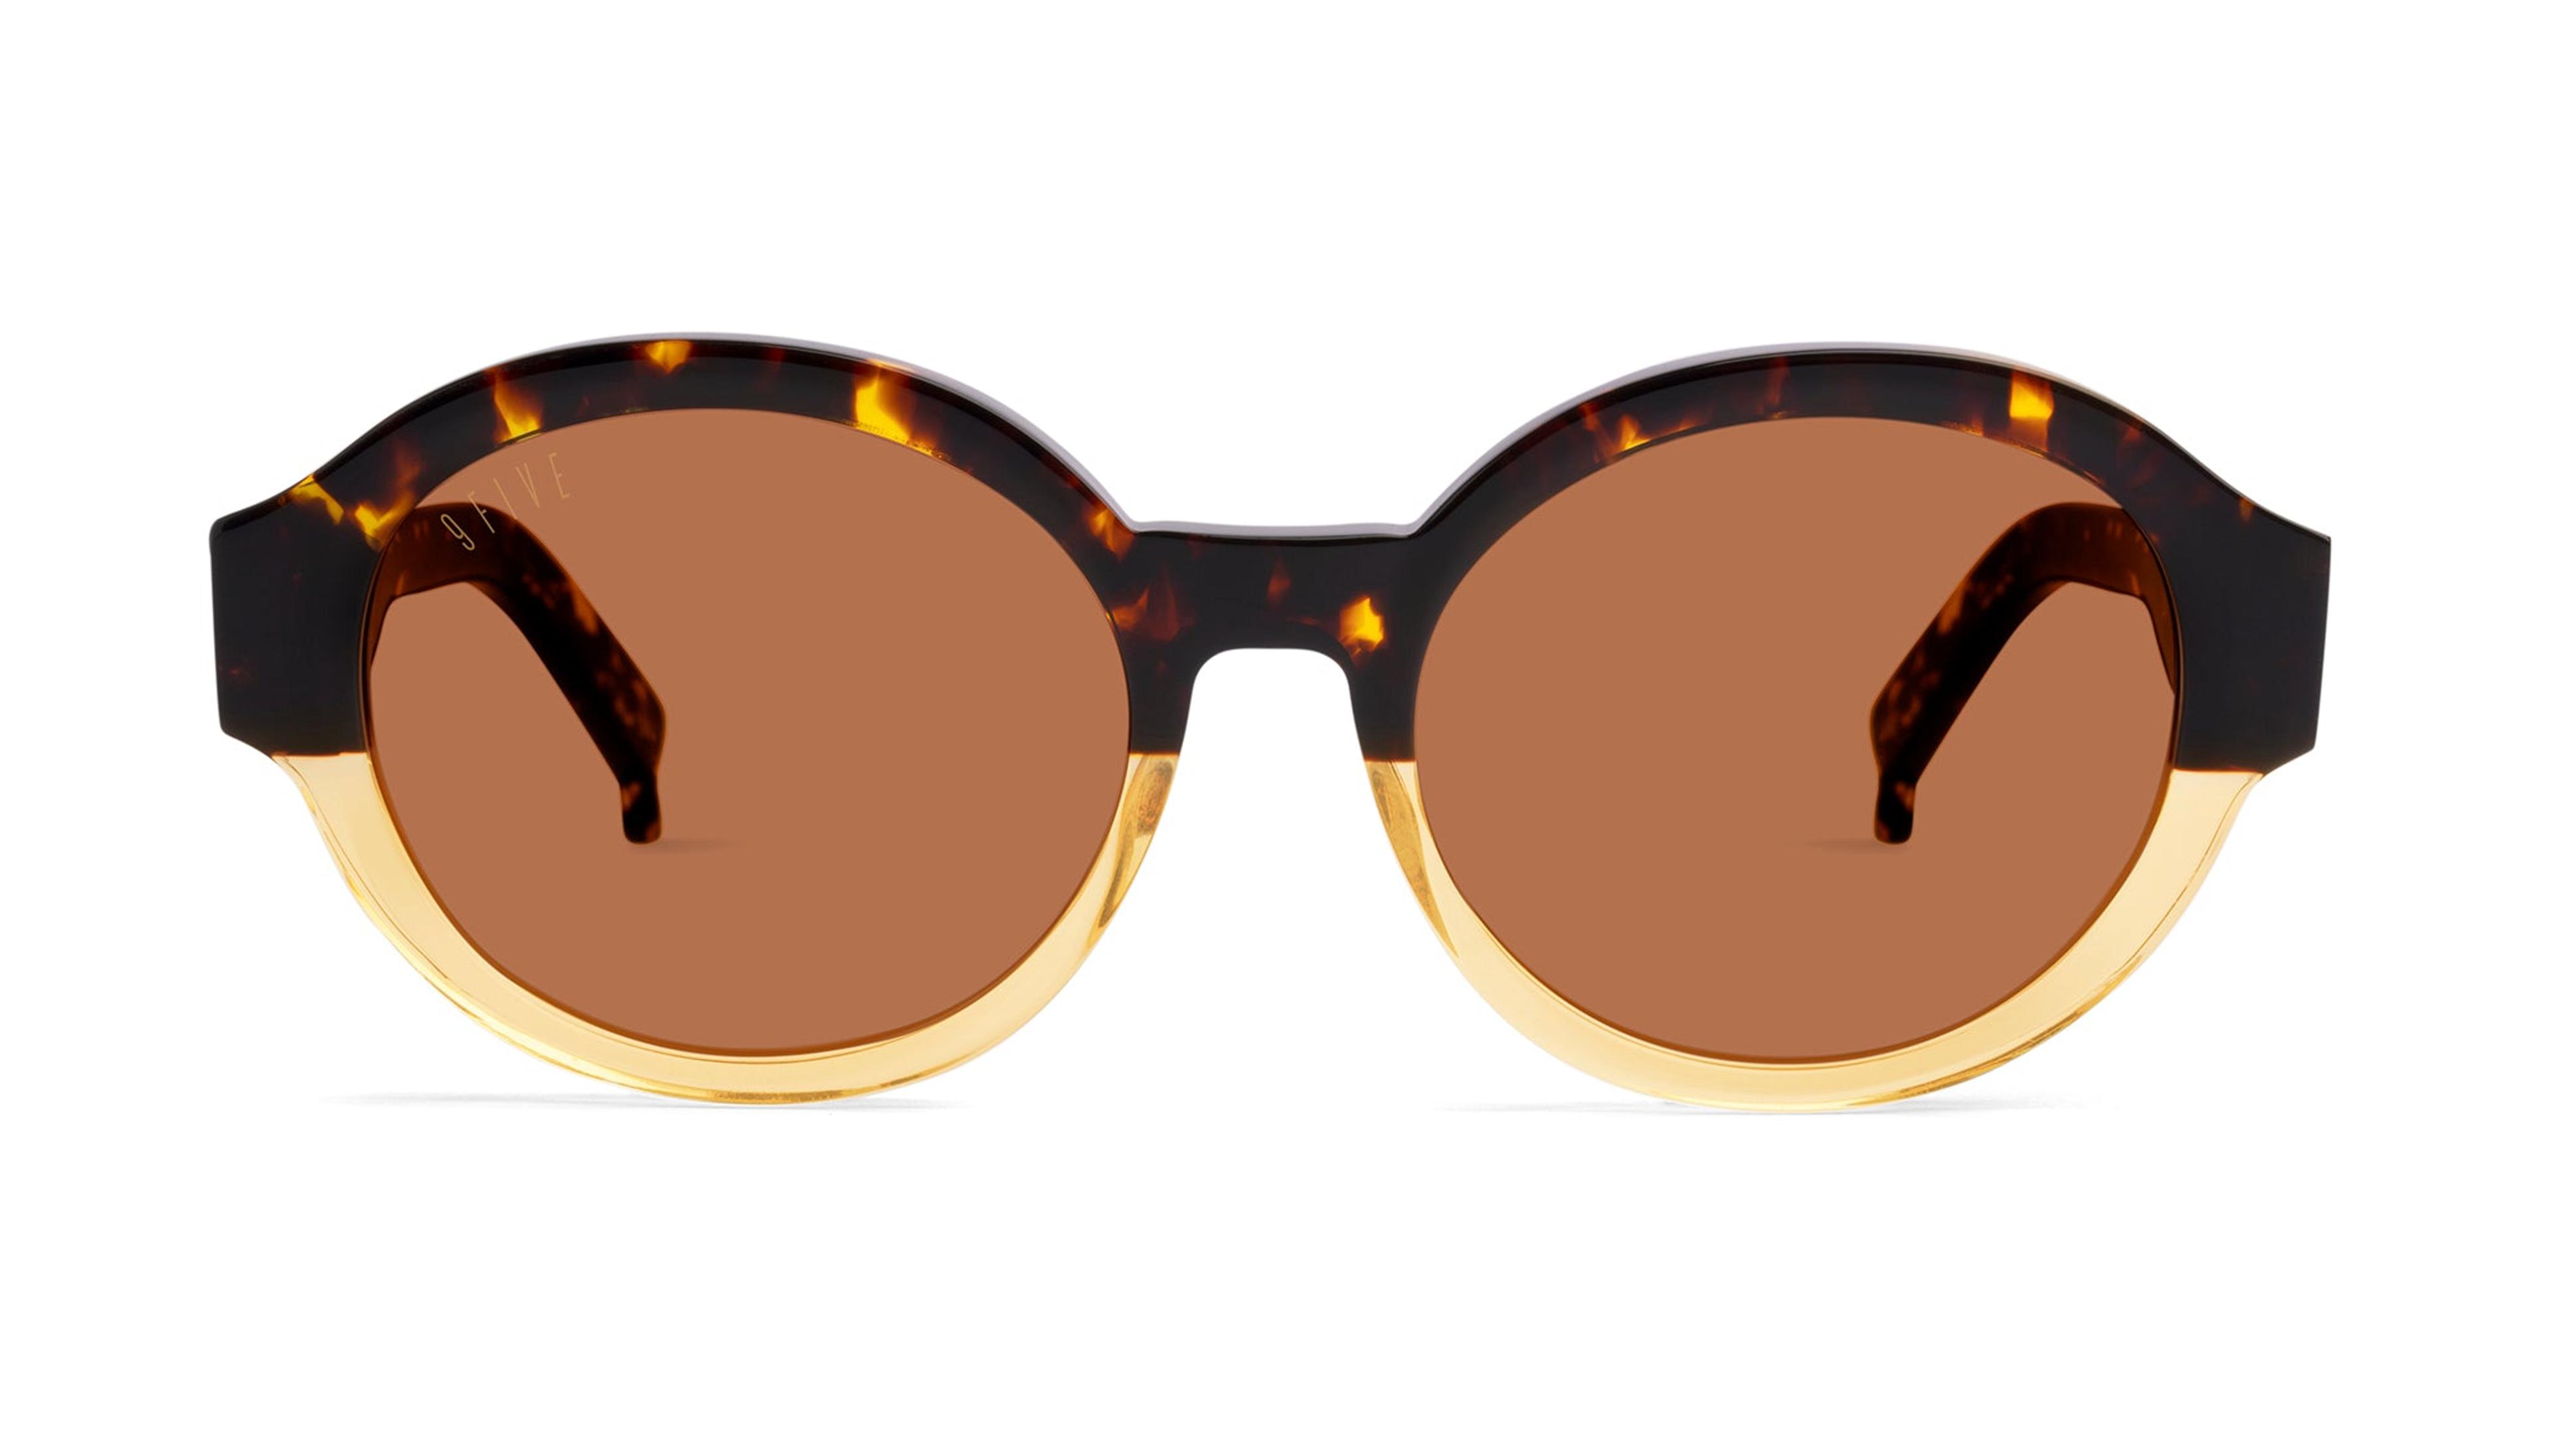 Alternate View 1 of 9FIVE Drips Tortoise & Gold Split Sunglasses